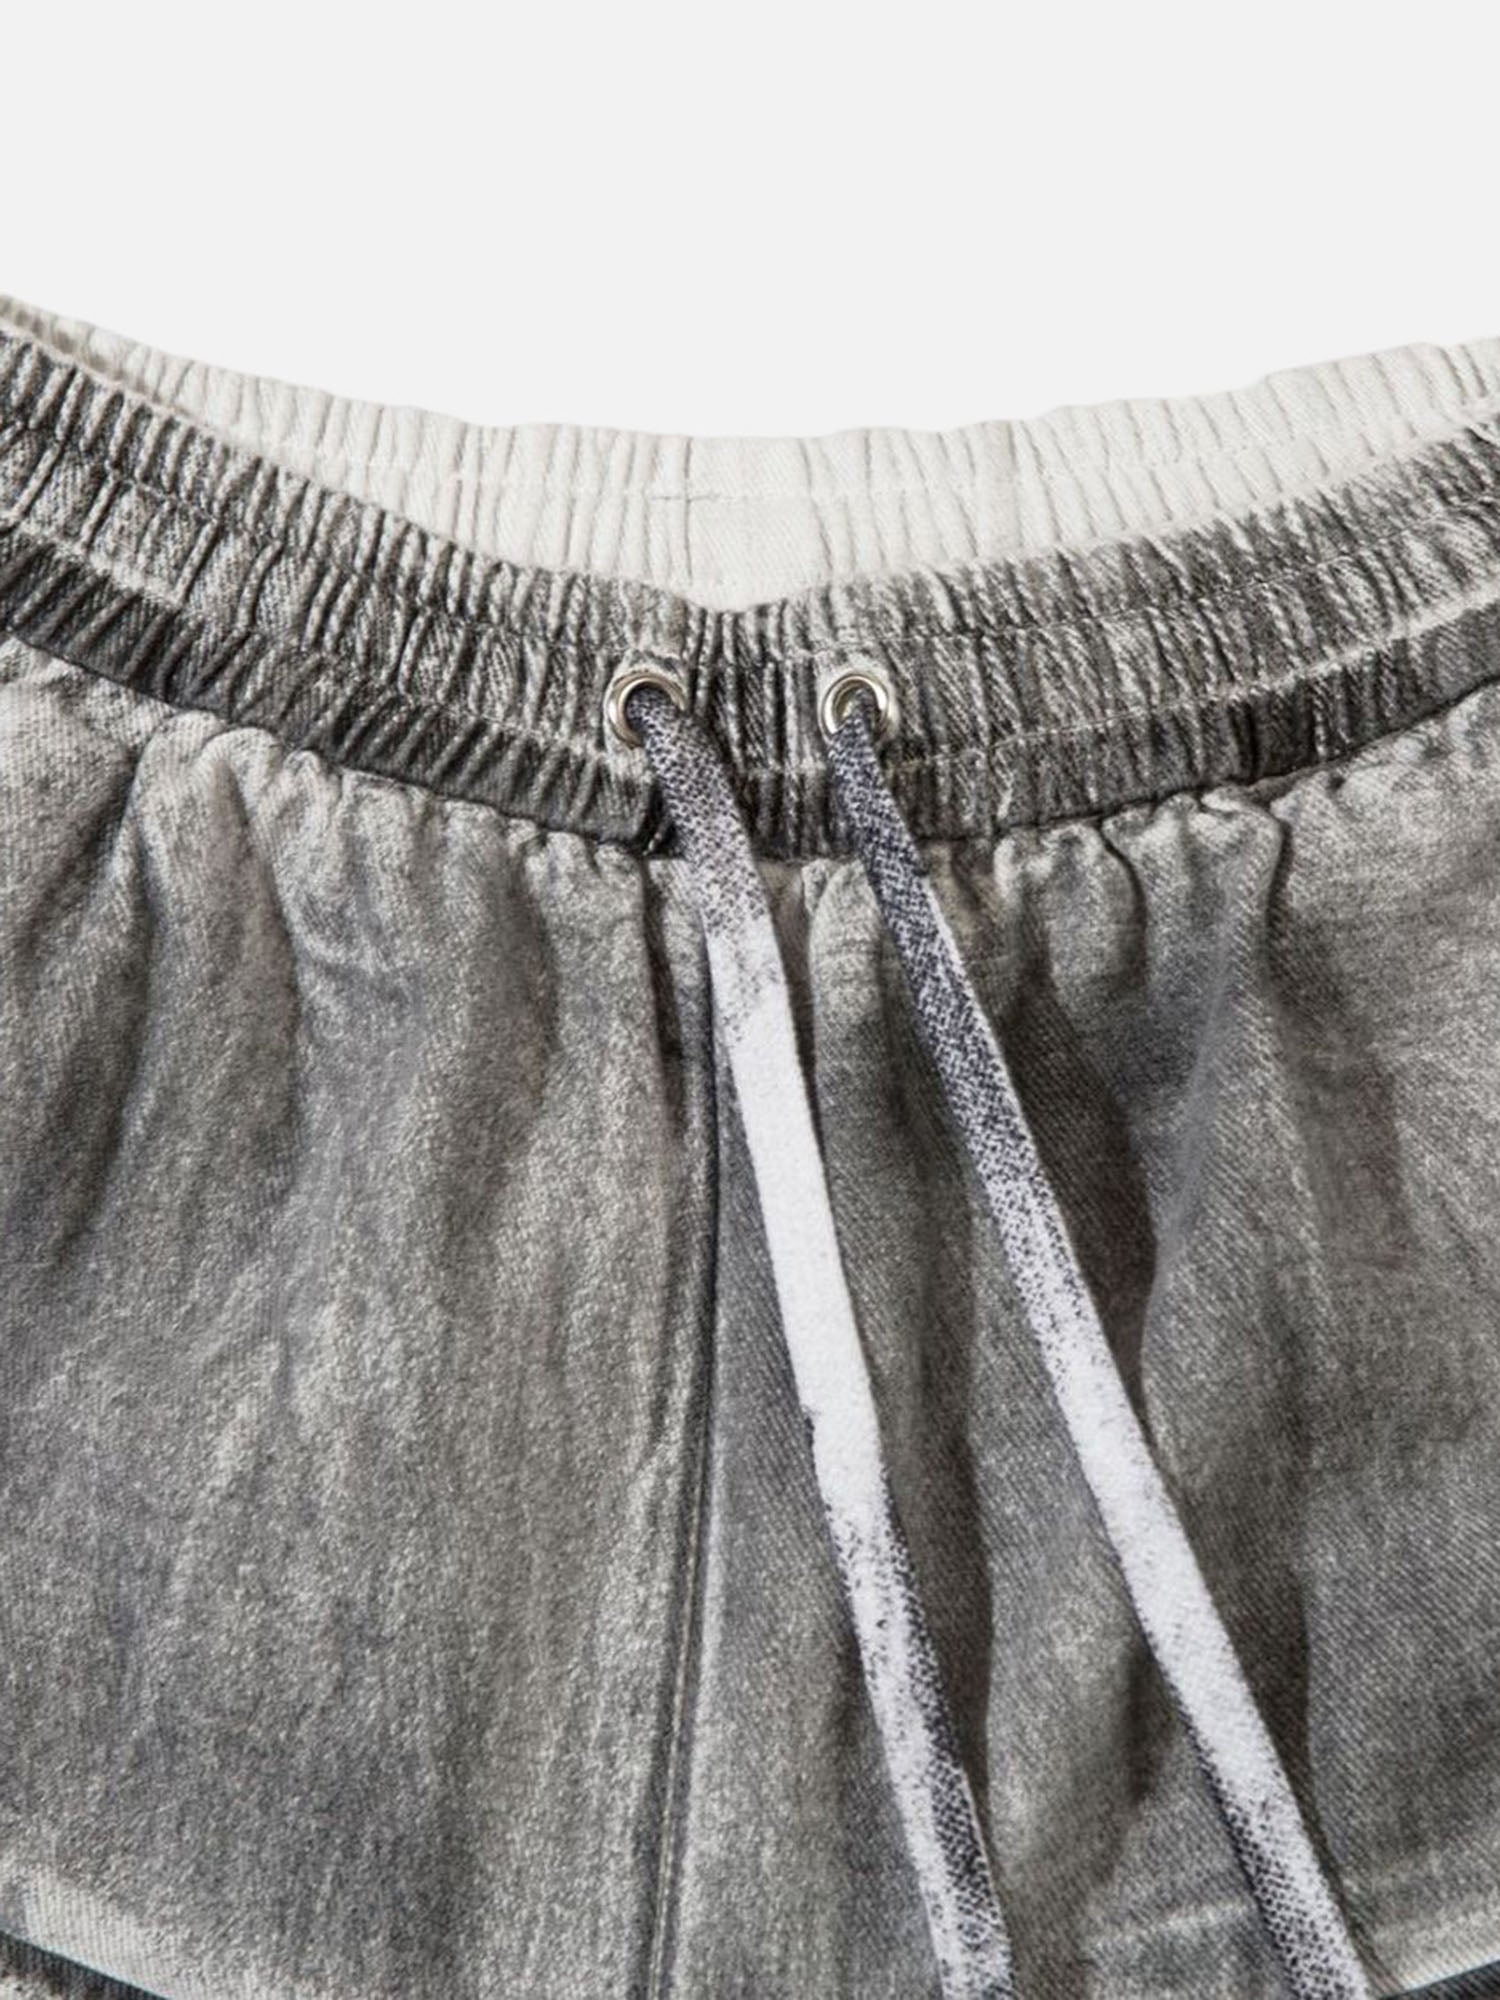 Street Fashion Heavy Industry Distressed Pocket Shorts